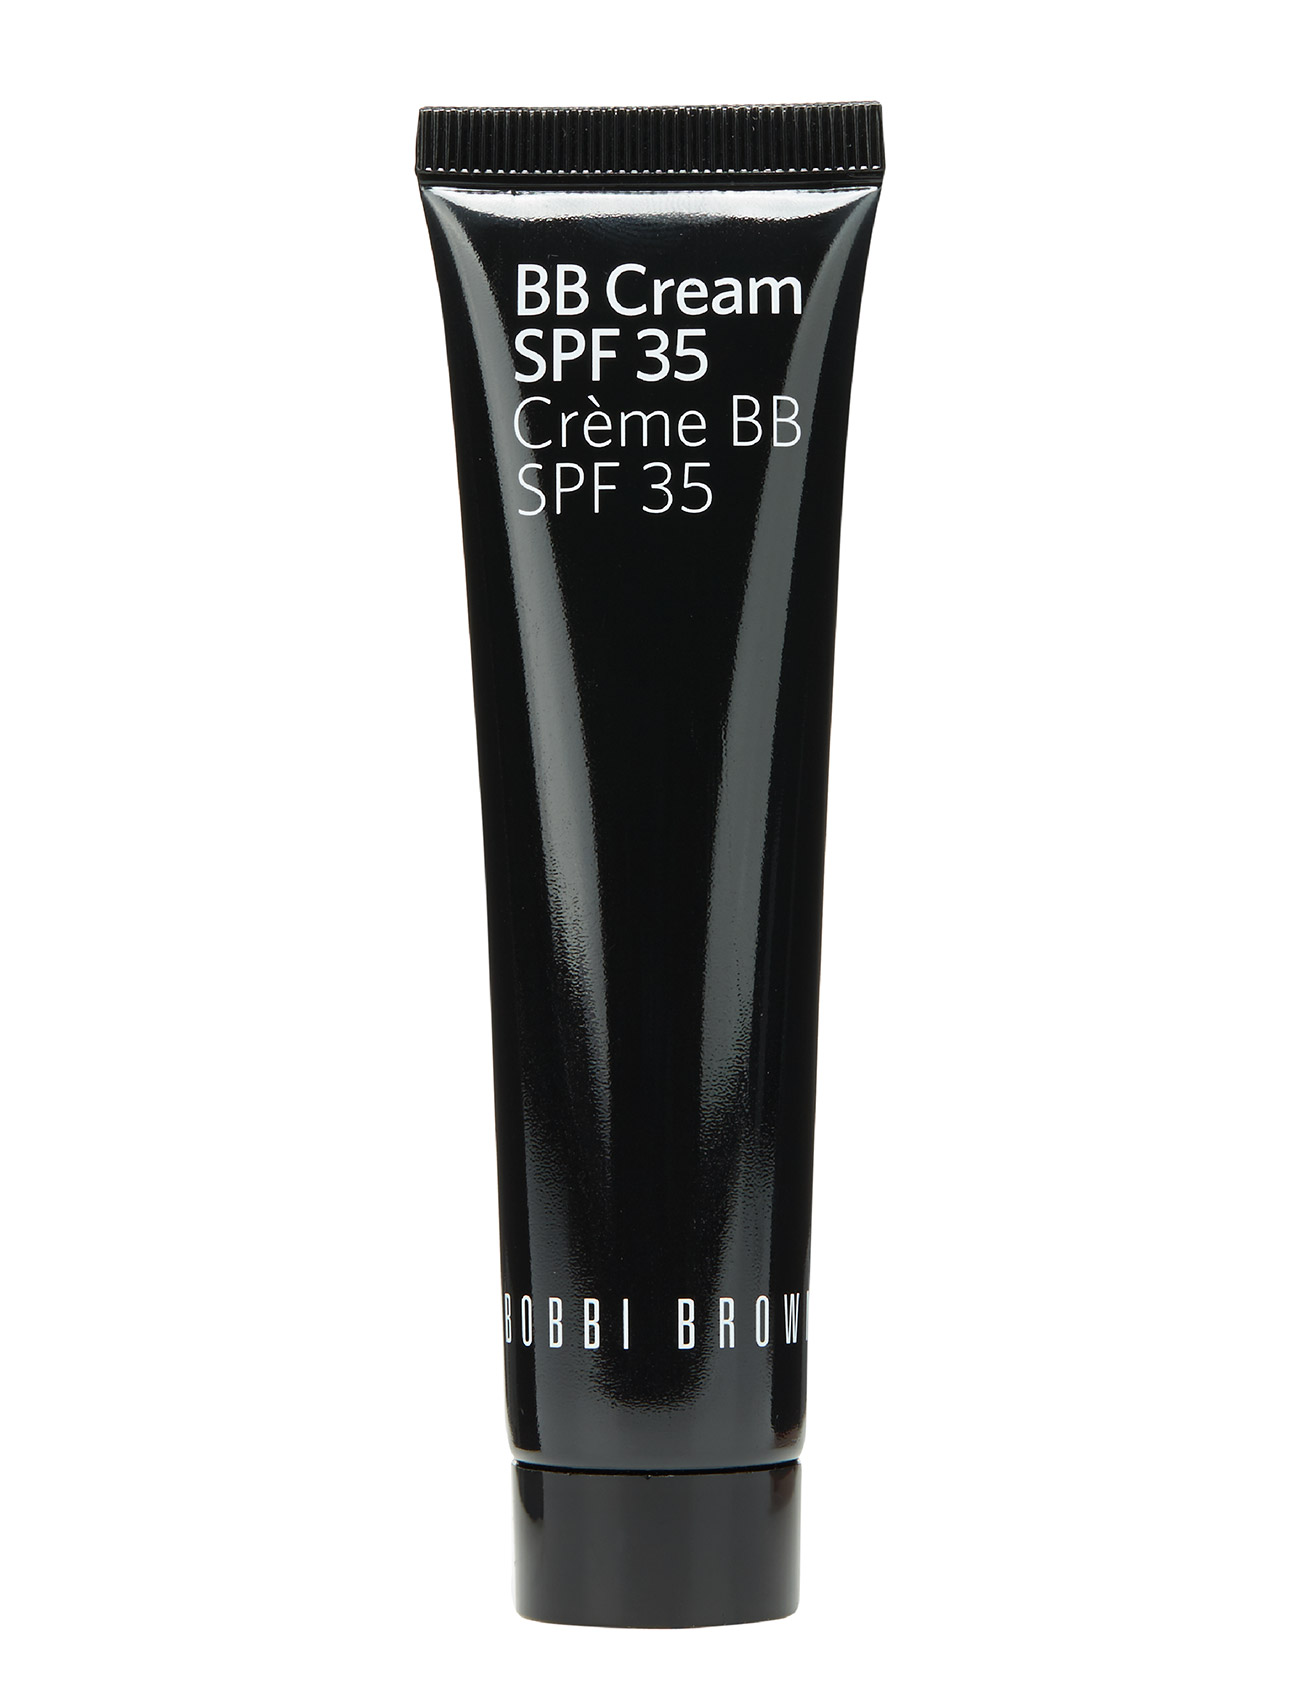 Bobbi Brown BB cream SPF 35